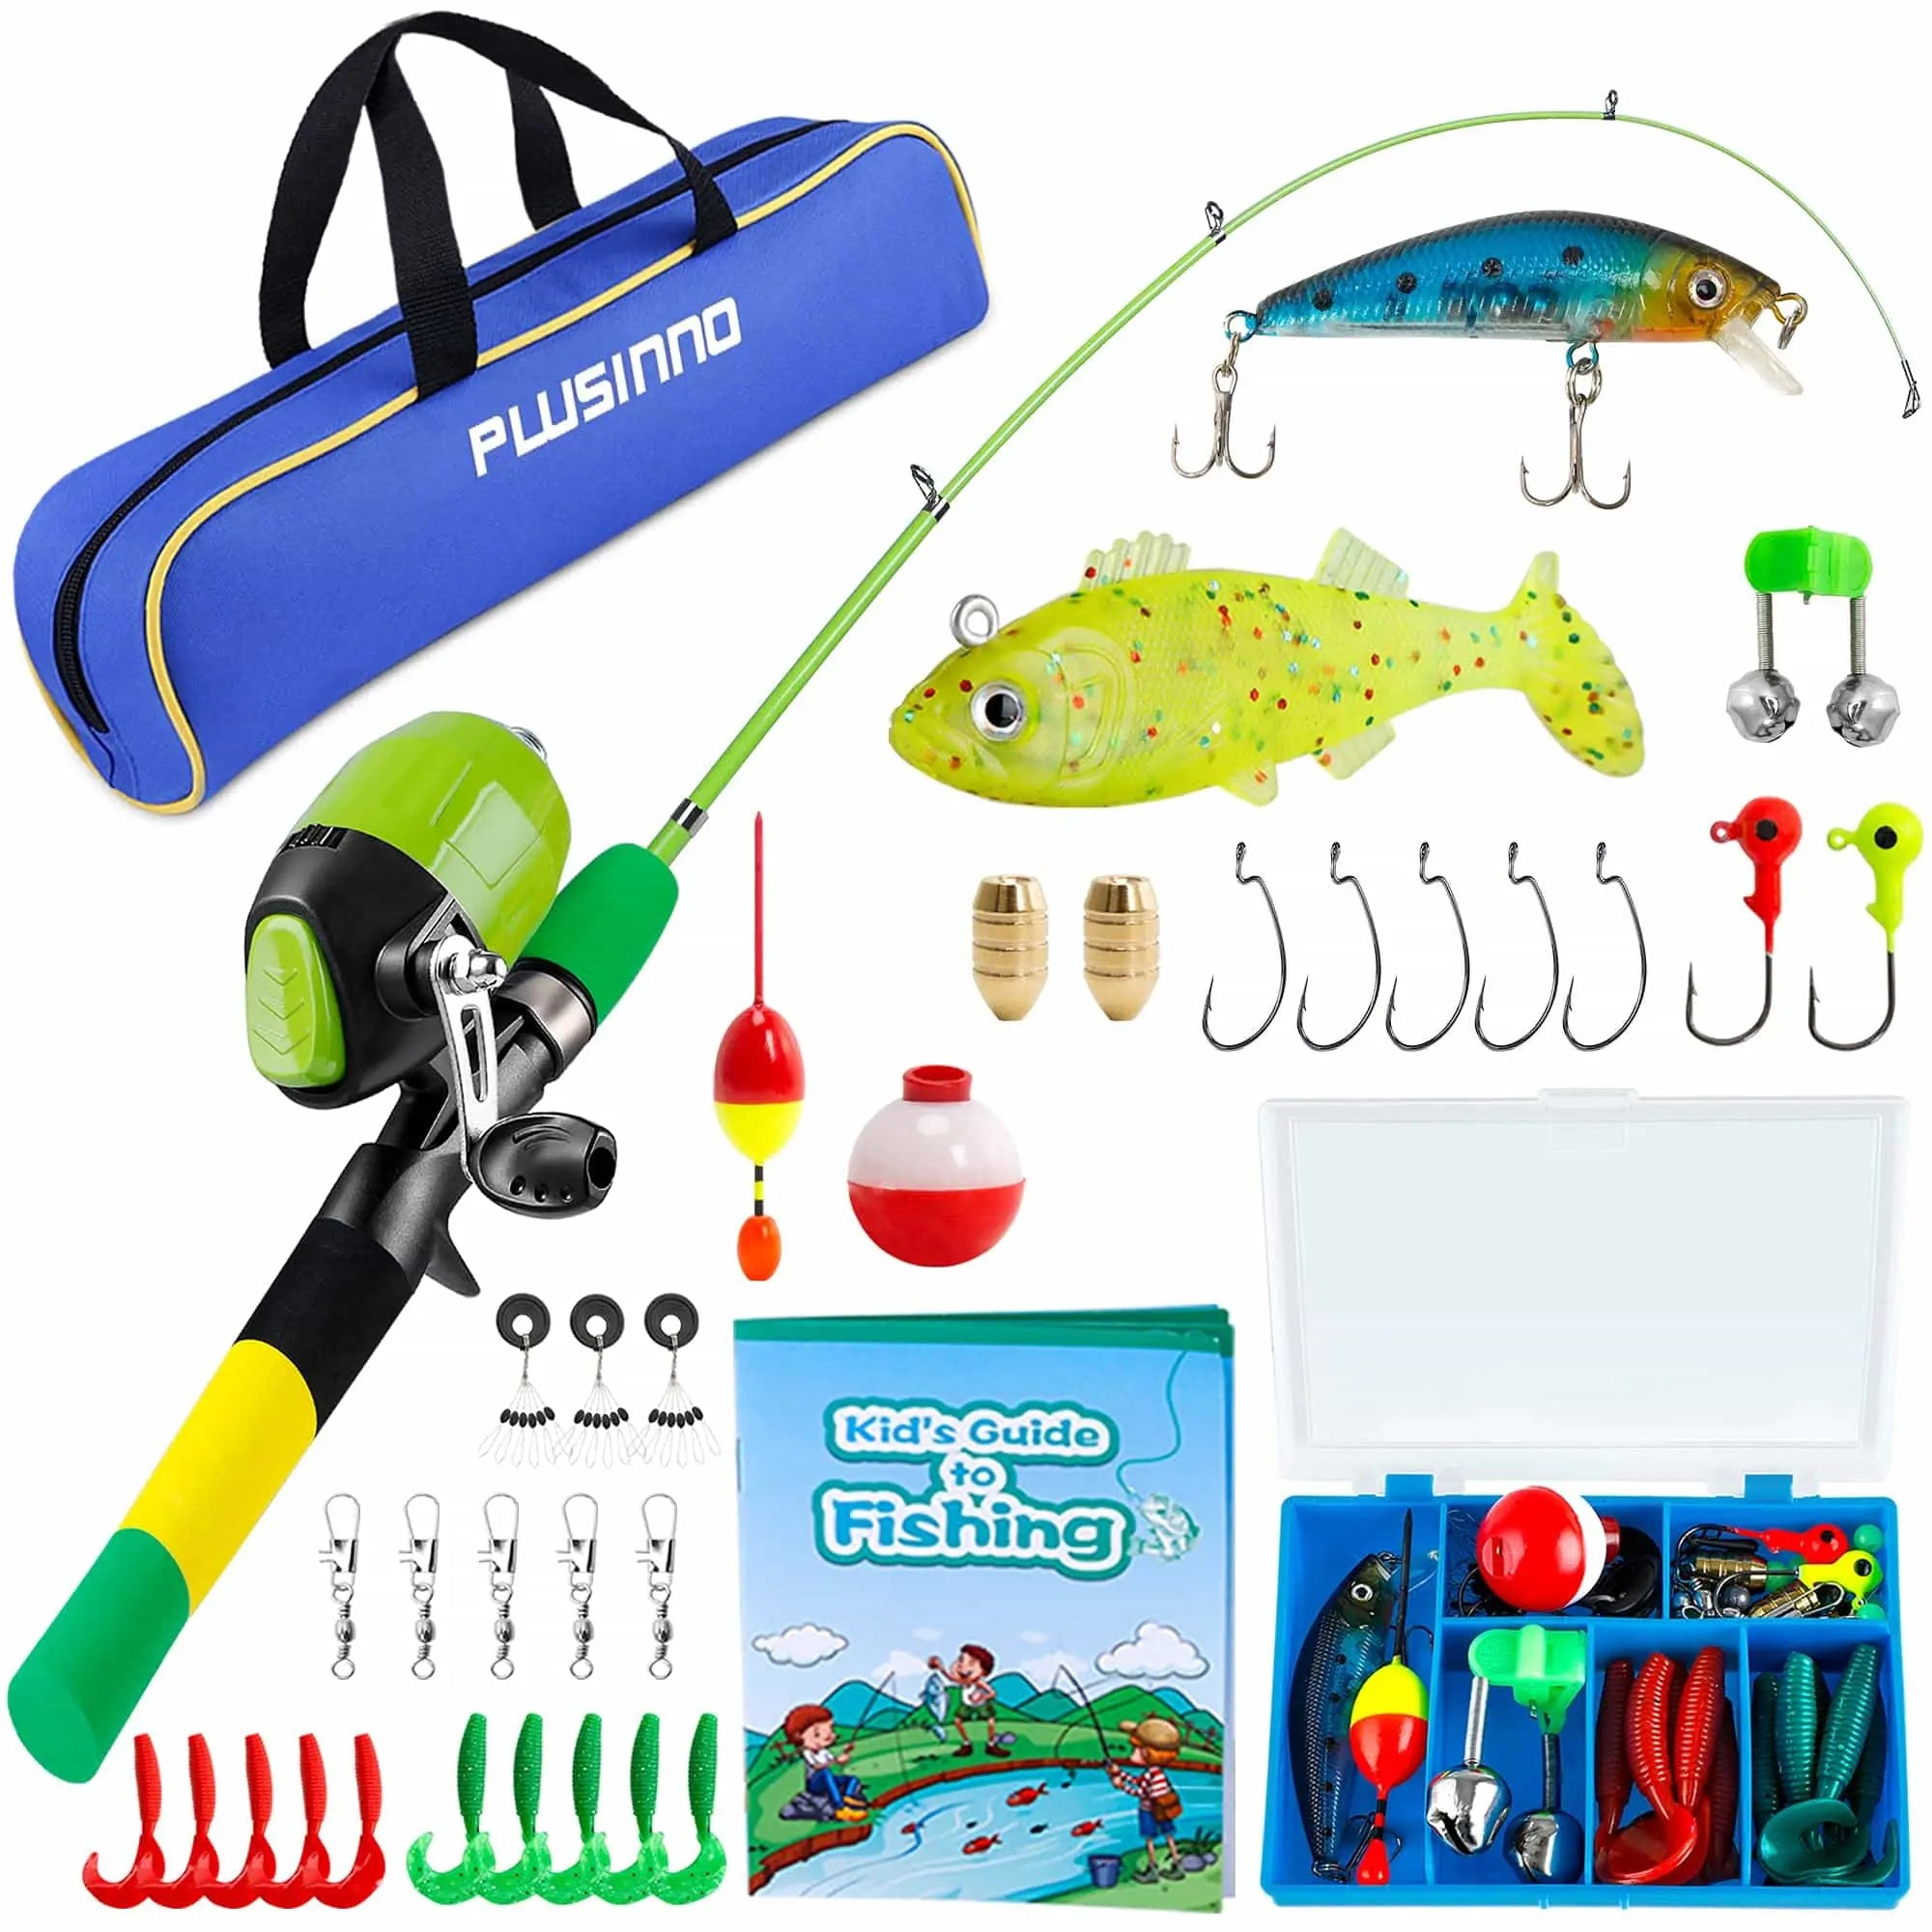 PLUSINNO Rainbow Kids Fishing and Reel Combos Kit complet sans filet